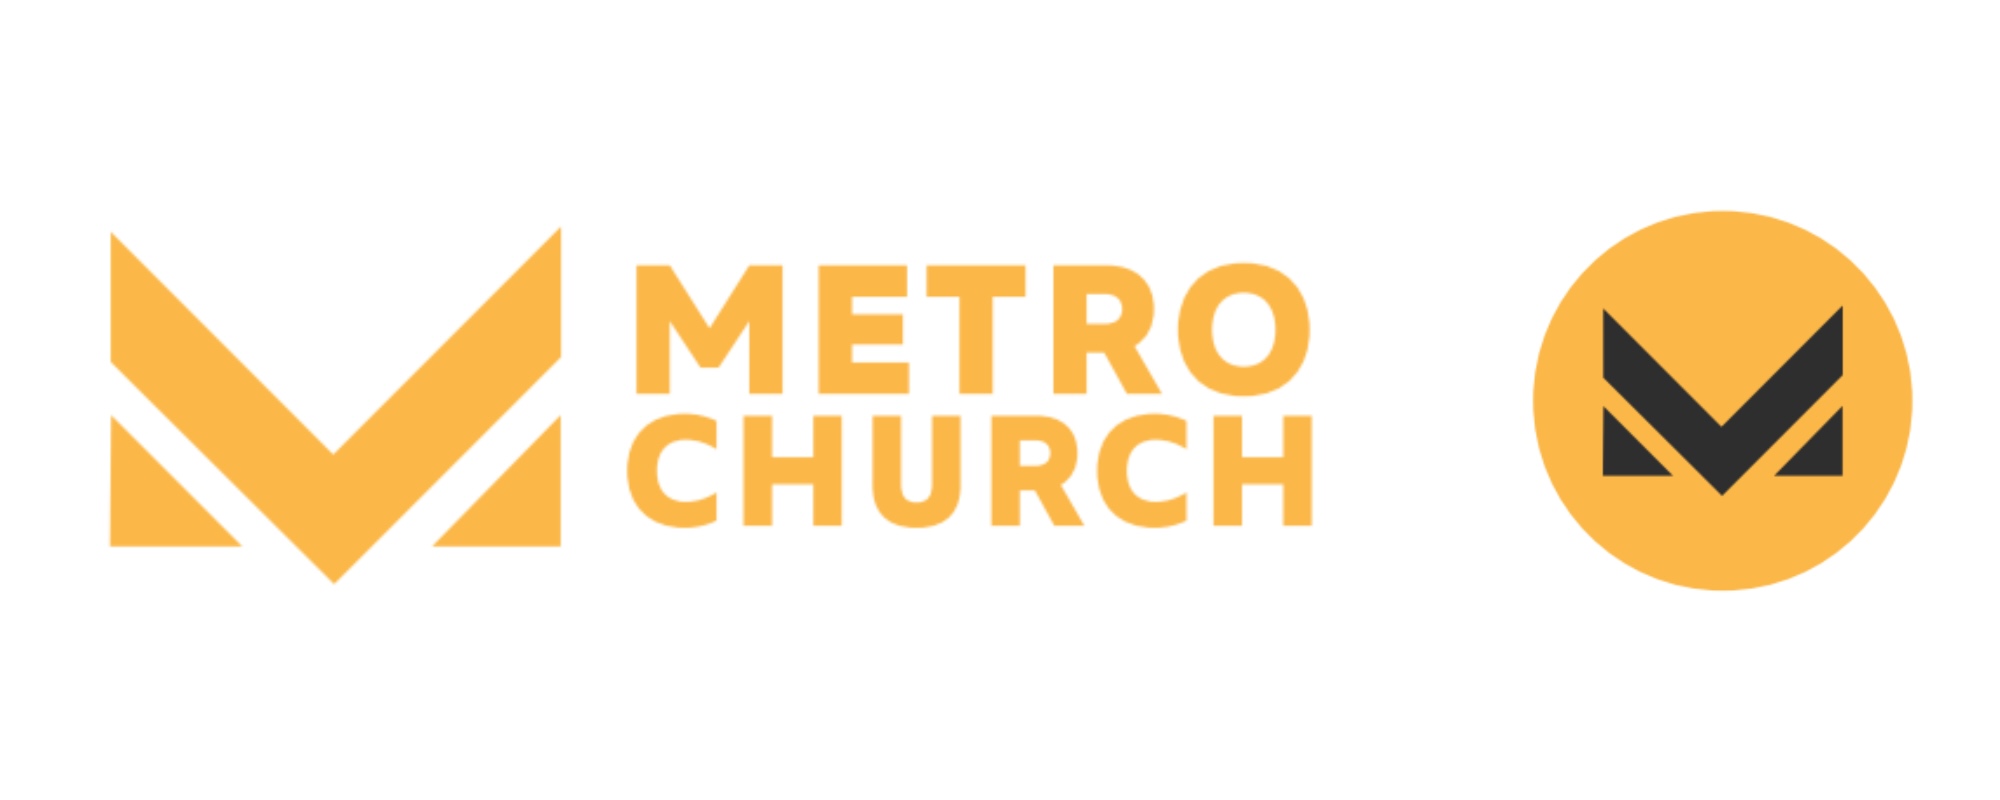 The Church Logo Design of Metro Church